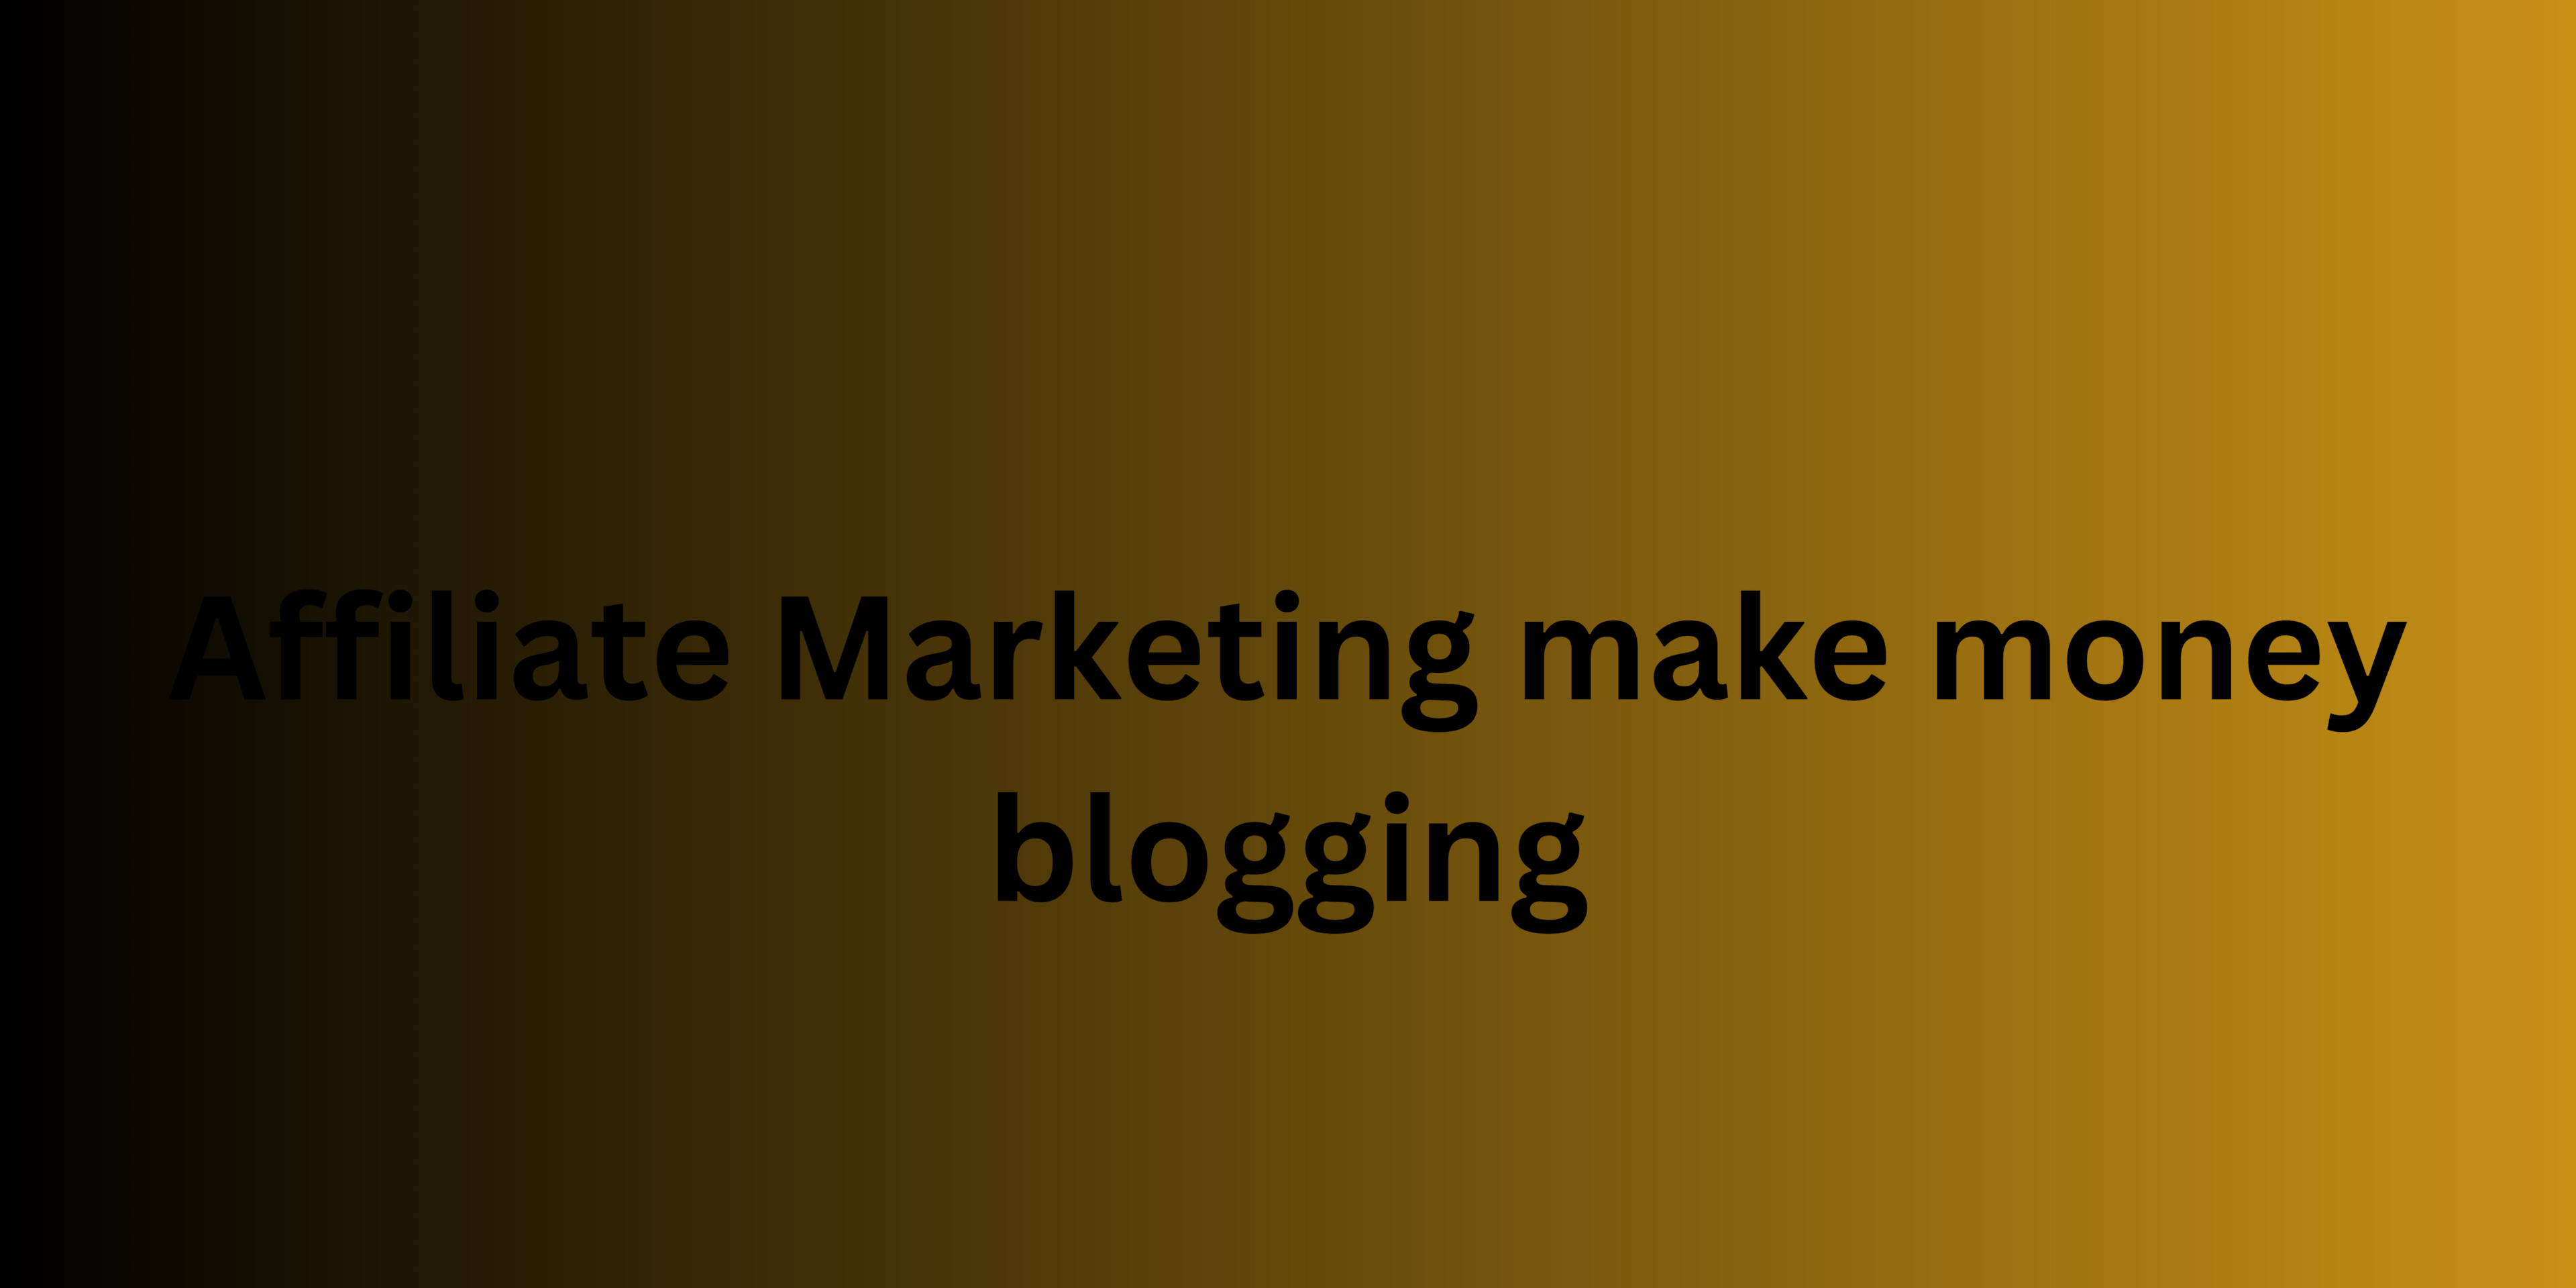 Affiliate Marketing make money blogging